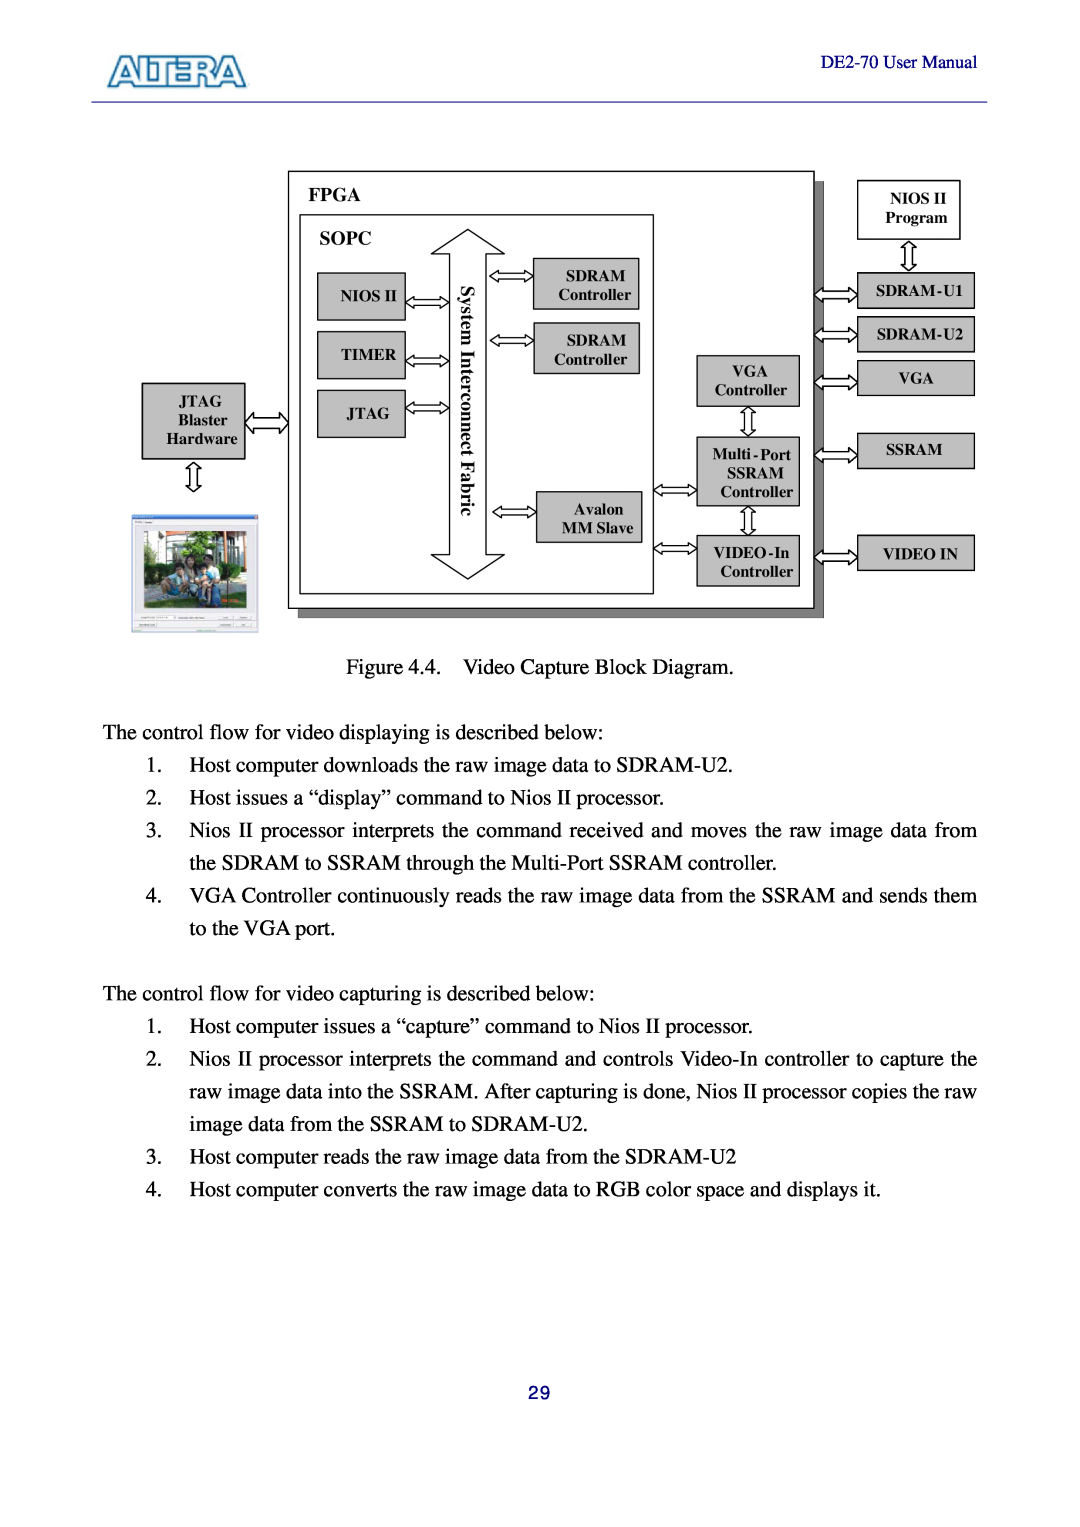 Sigma DE2-70 manual 4. Video Capture Block Diagram 